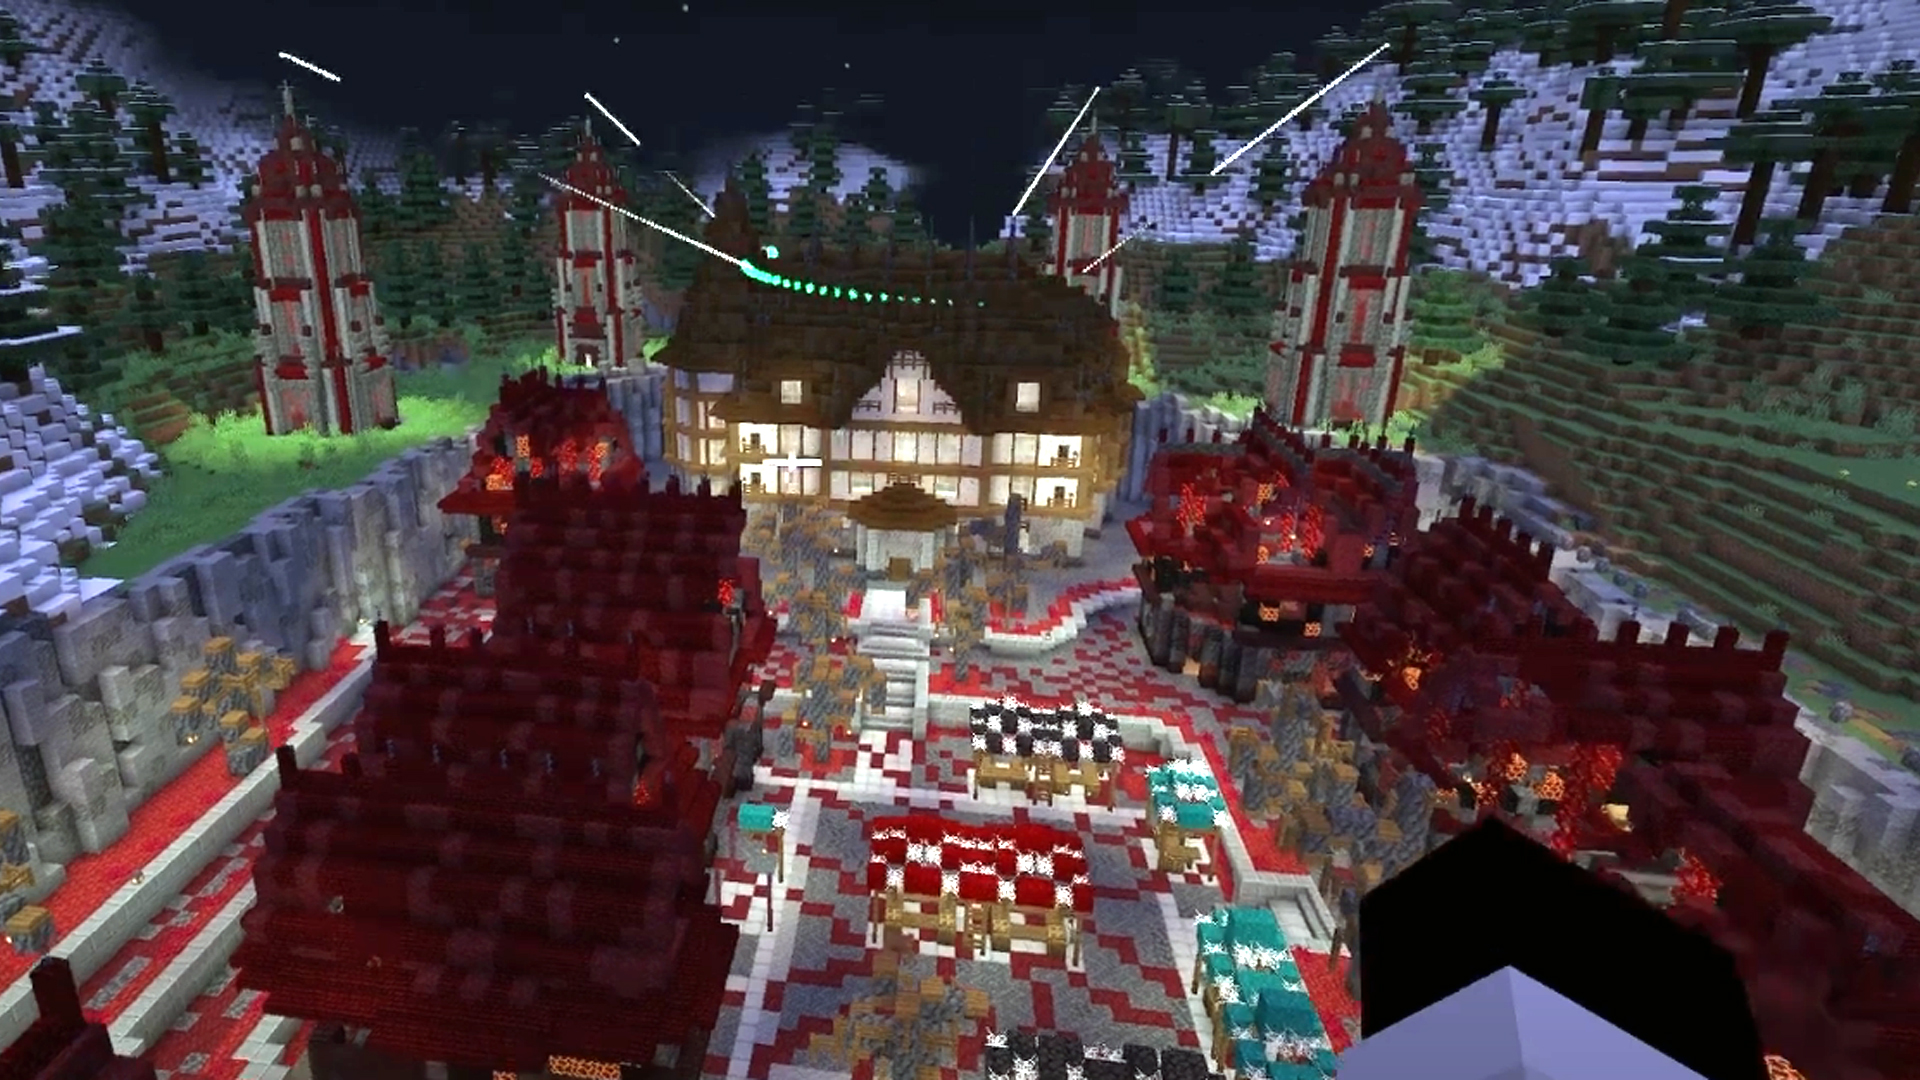 This Minecraft builder made a stunning transforming village